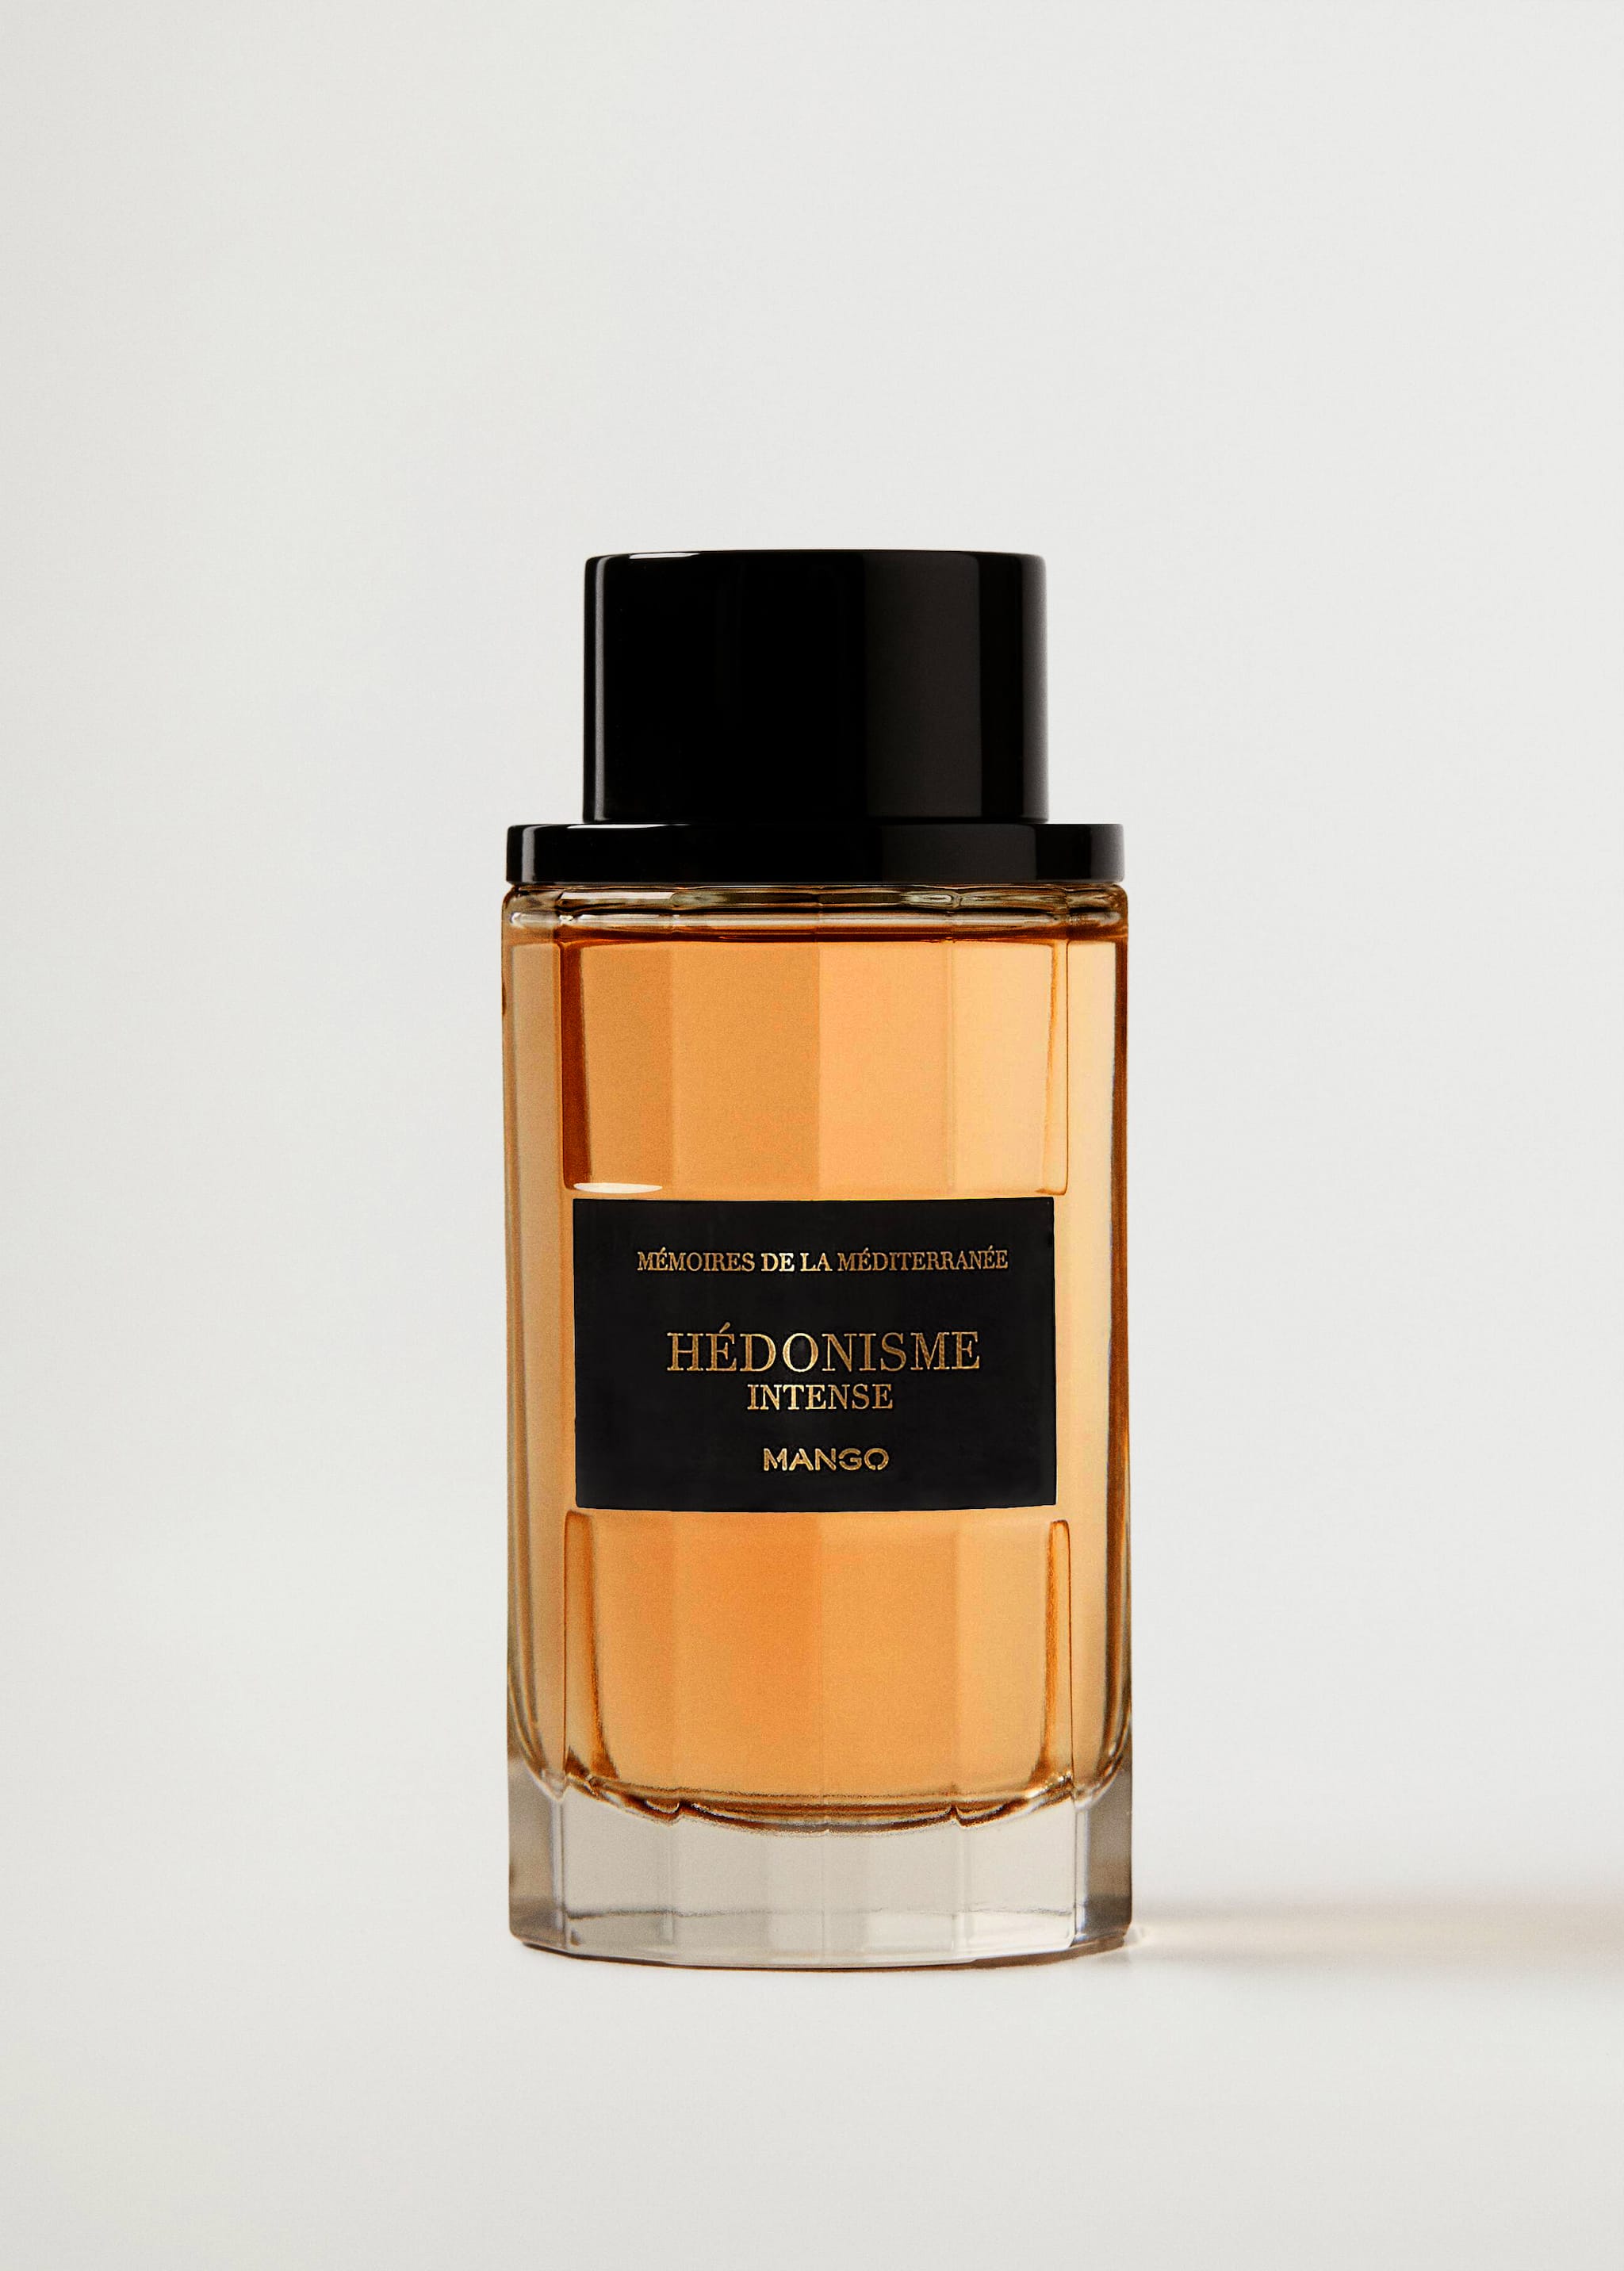 Hédonisme intense fragrance 100 ml - Article without model